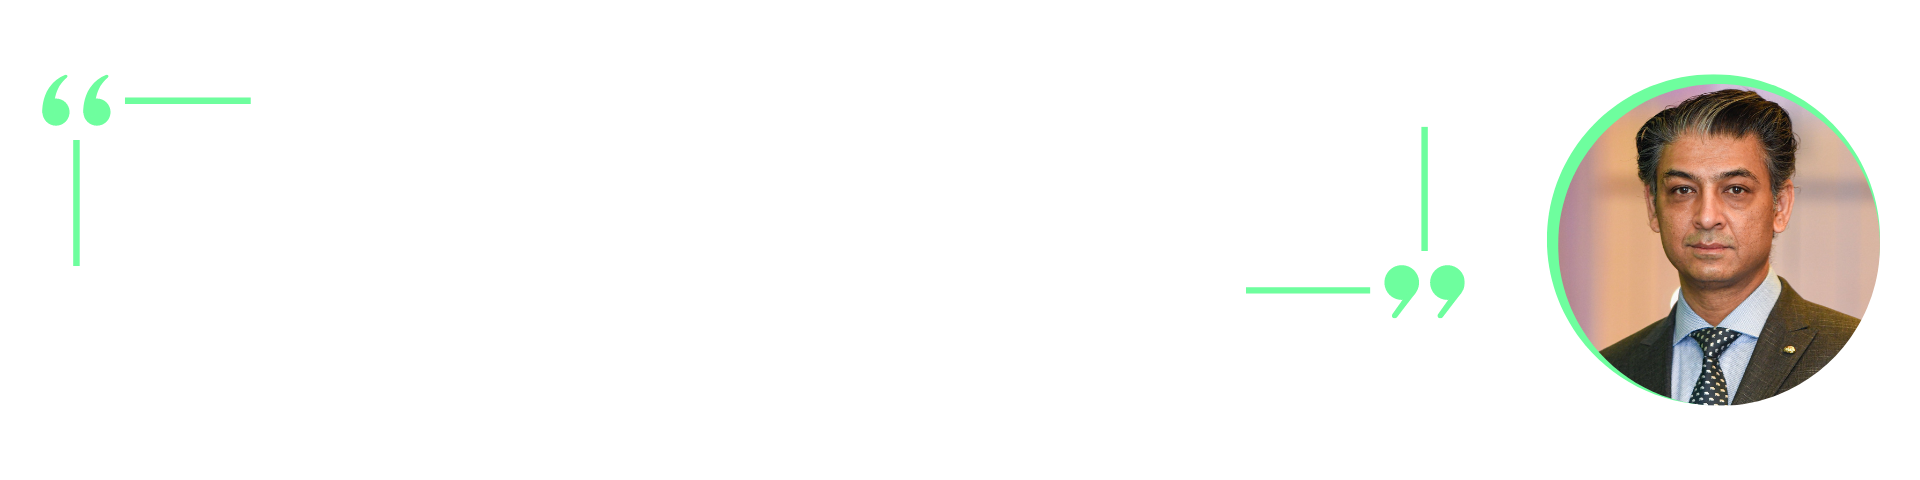 Doctor Adnan Siddiqui's quotation: 